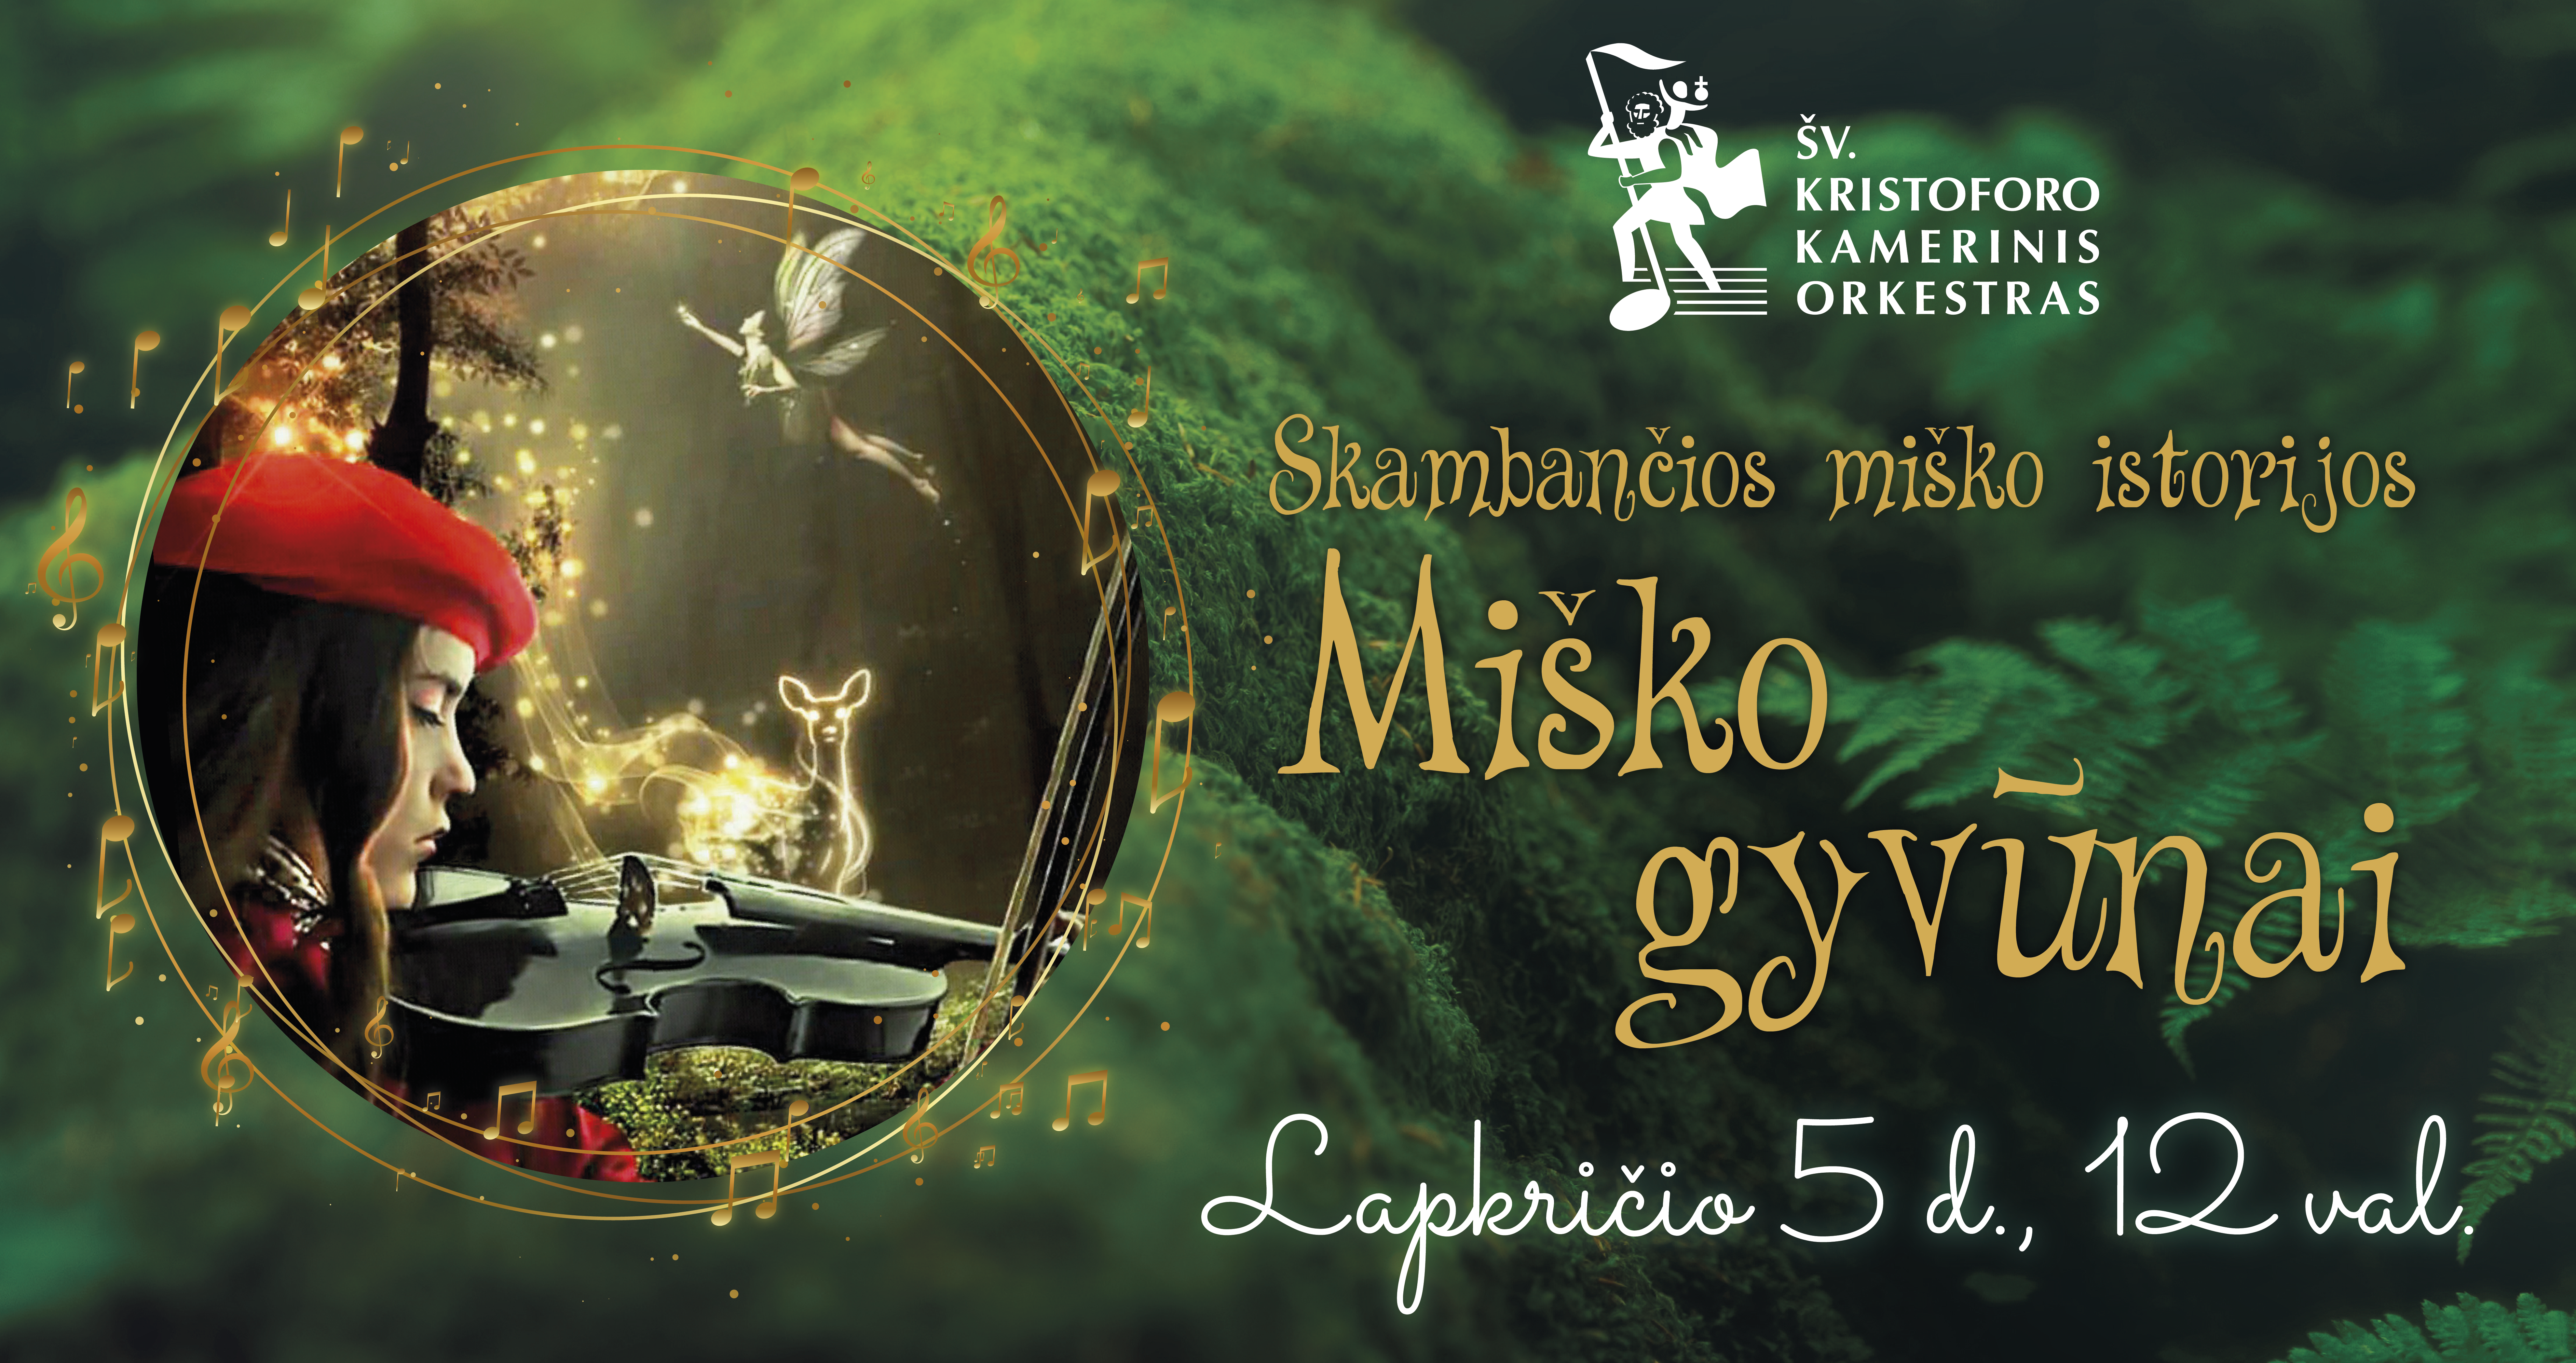 11-05-Misko-gyvunai-FB-event.png